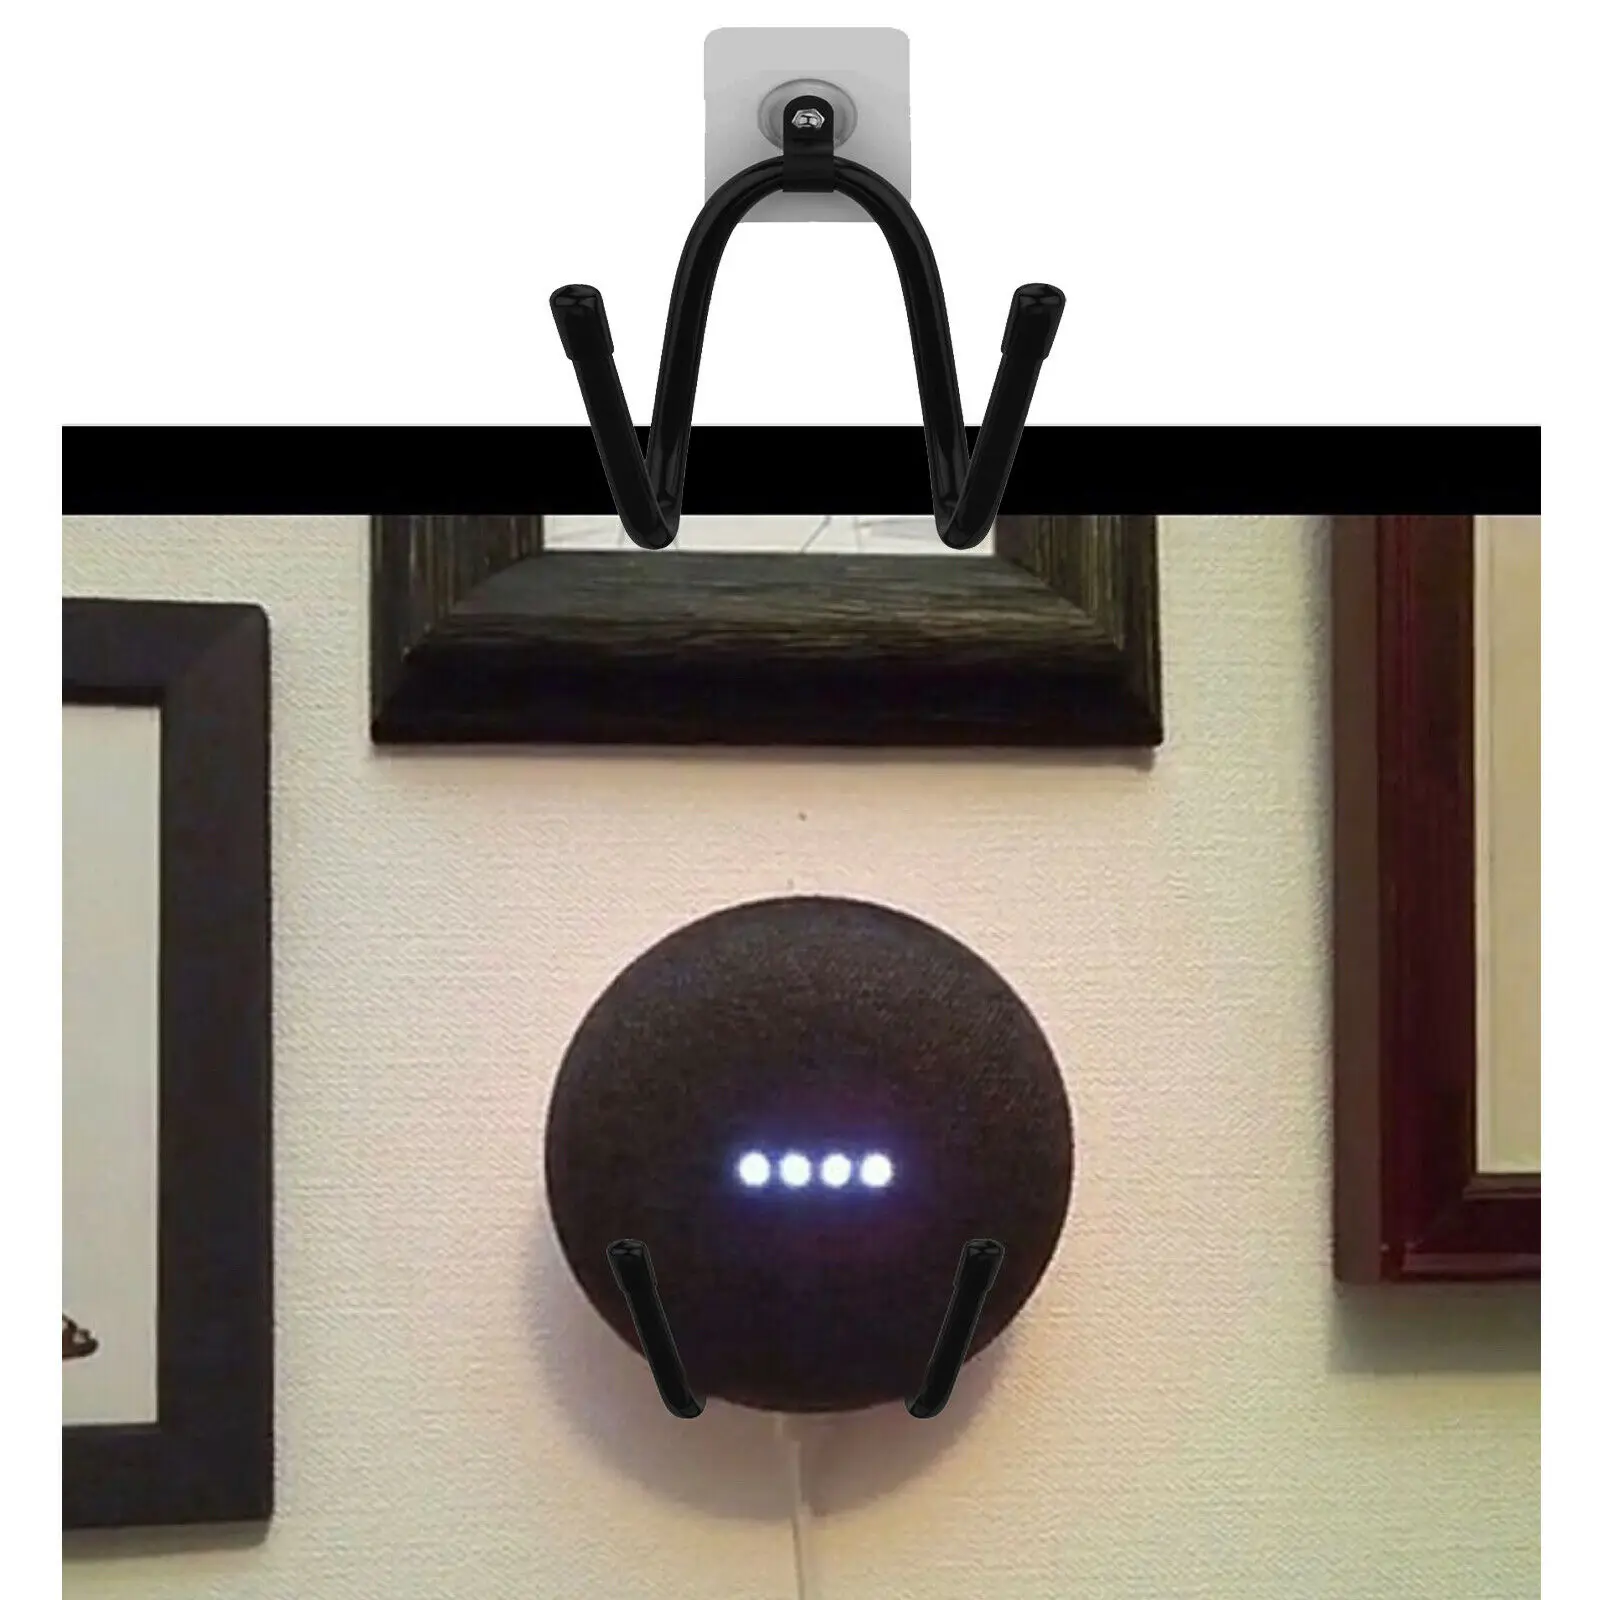 4x Wall Mount Stand Hanger Holder for Google Home Mini Smart Assistant Speaker 